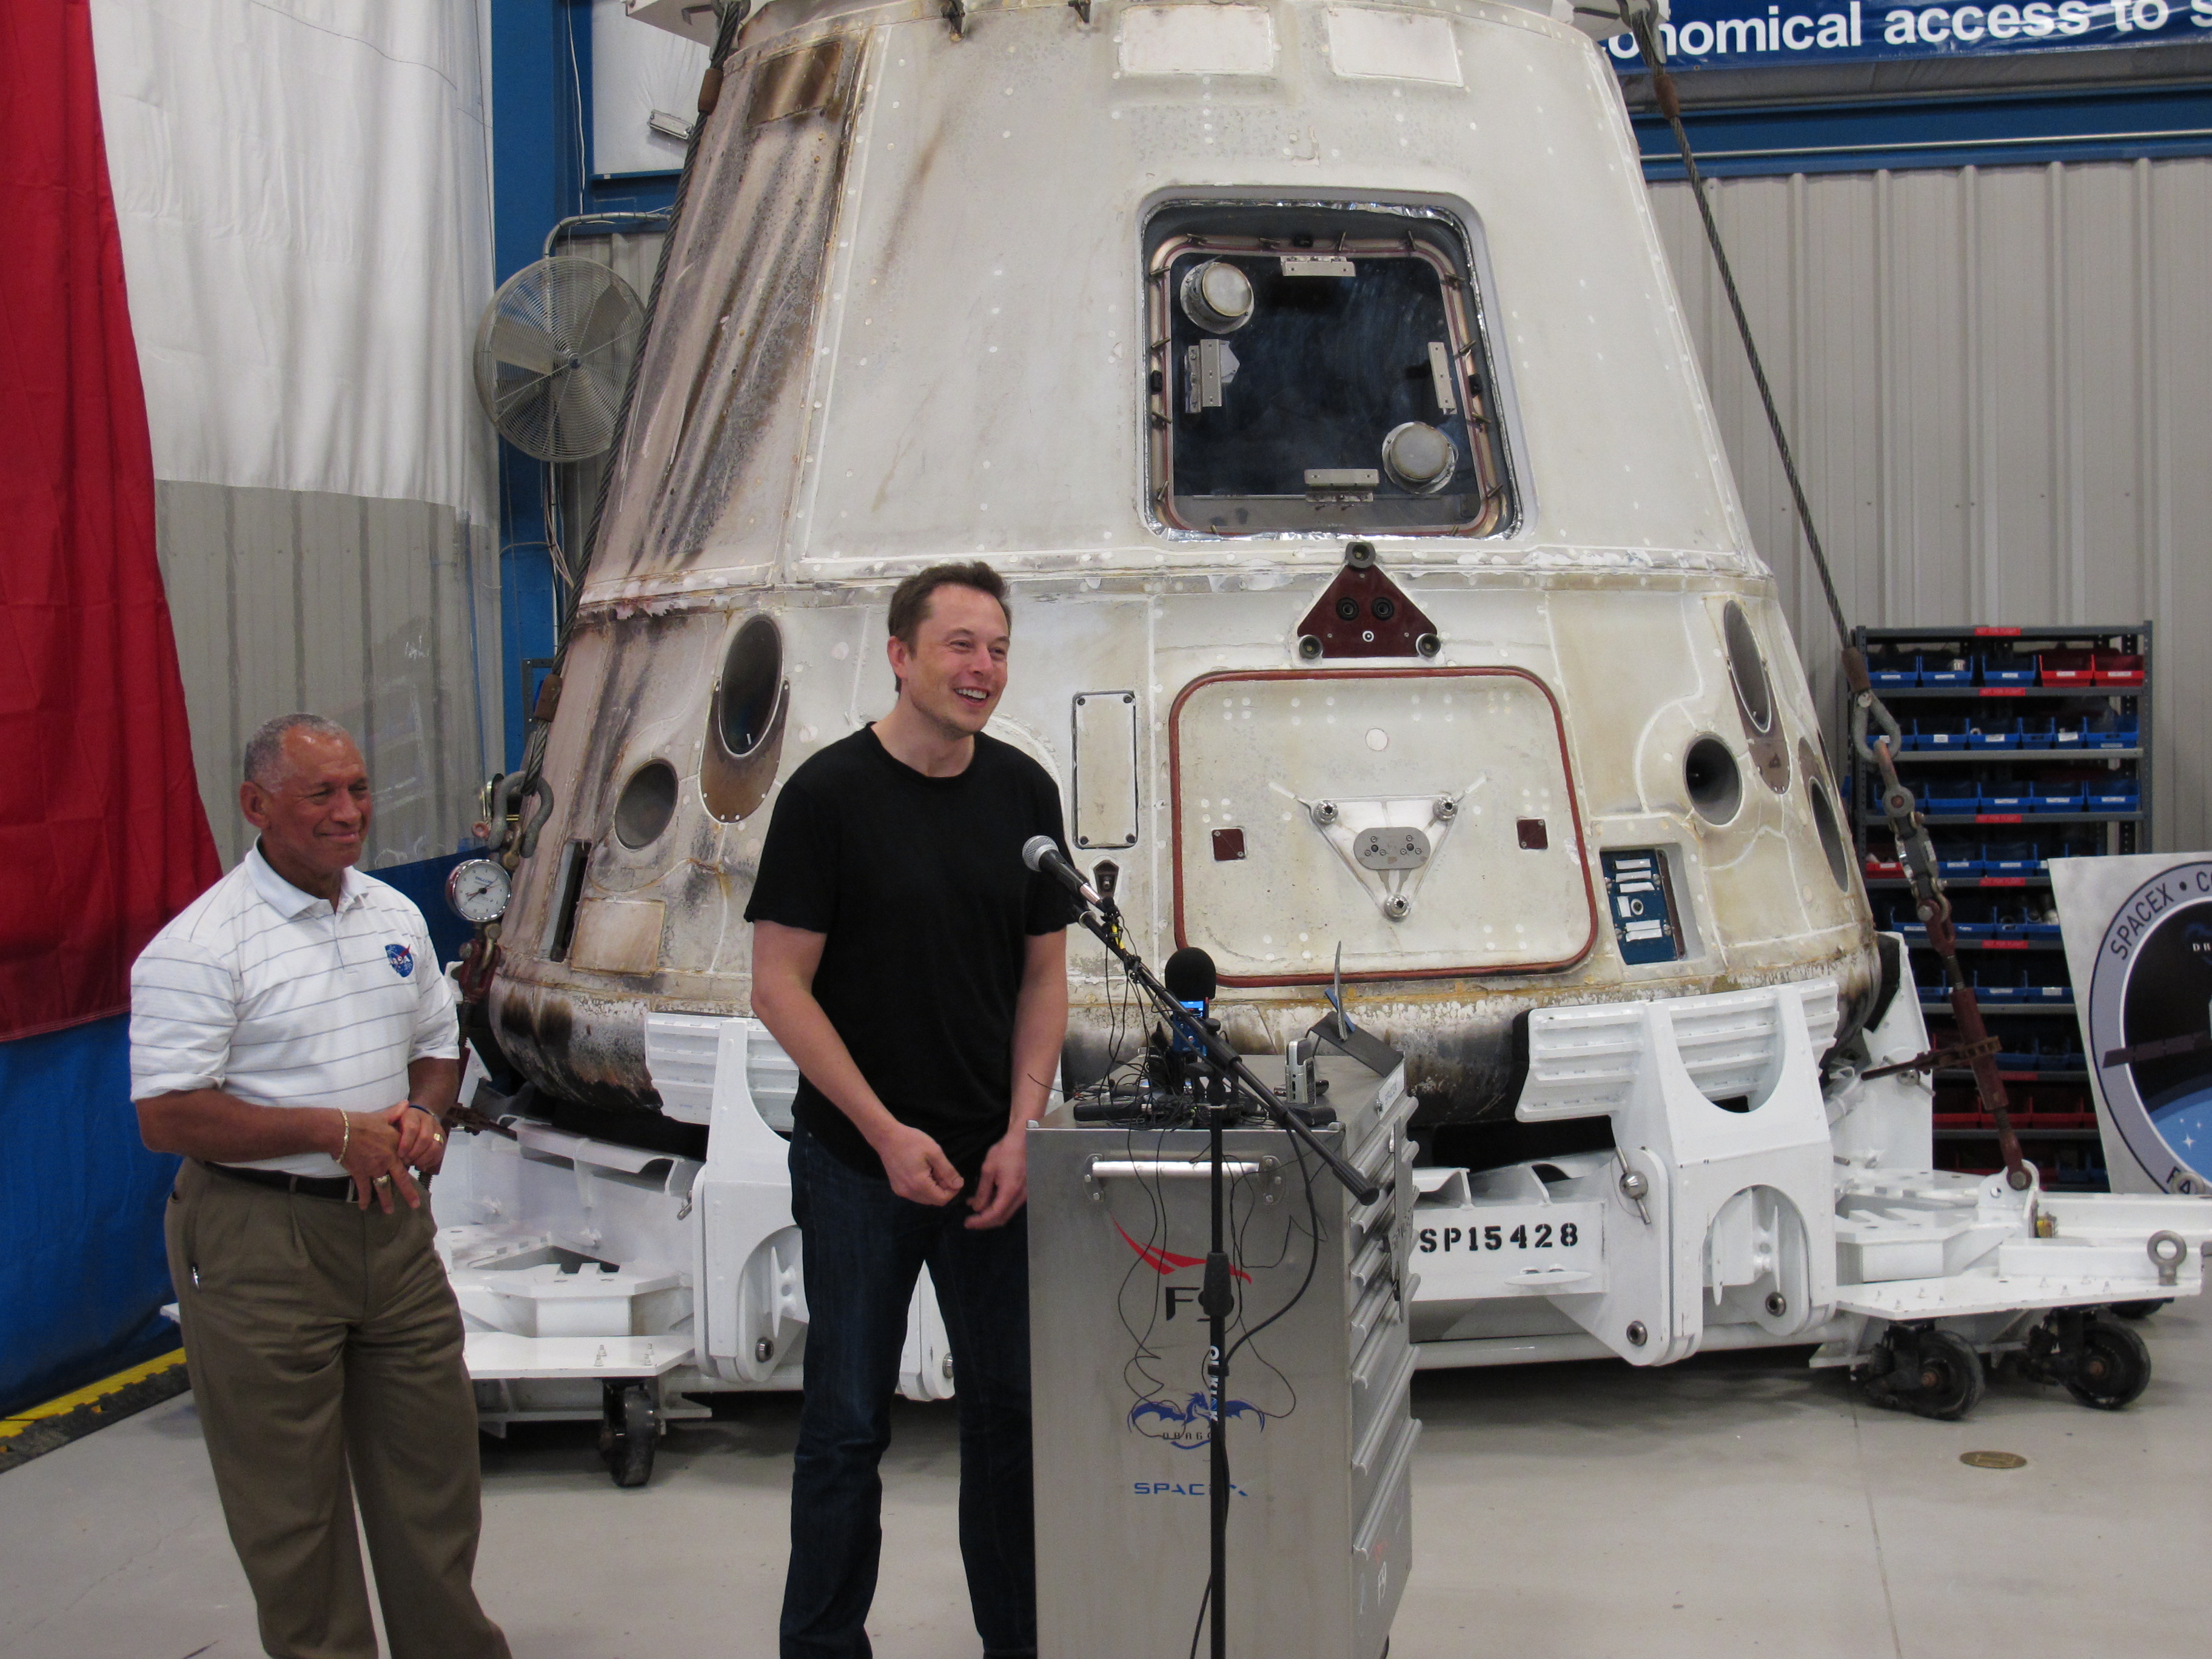 Elon Musk speaking at the SpaceX rocket testing site in McGregor, Texas